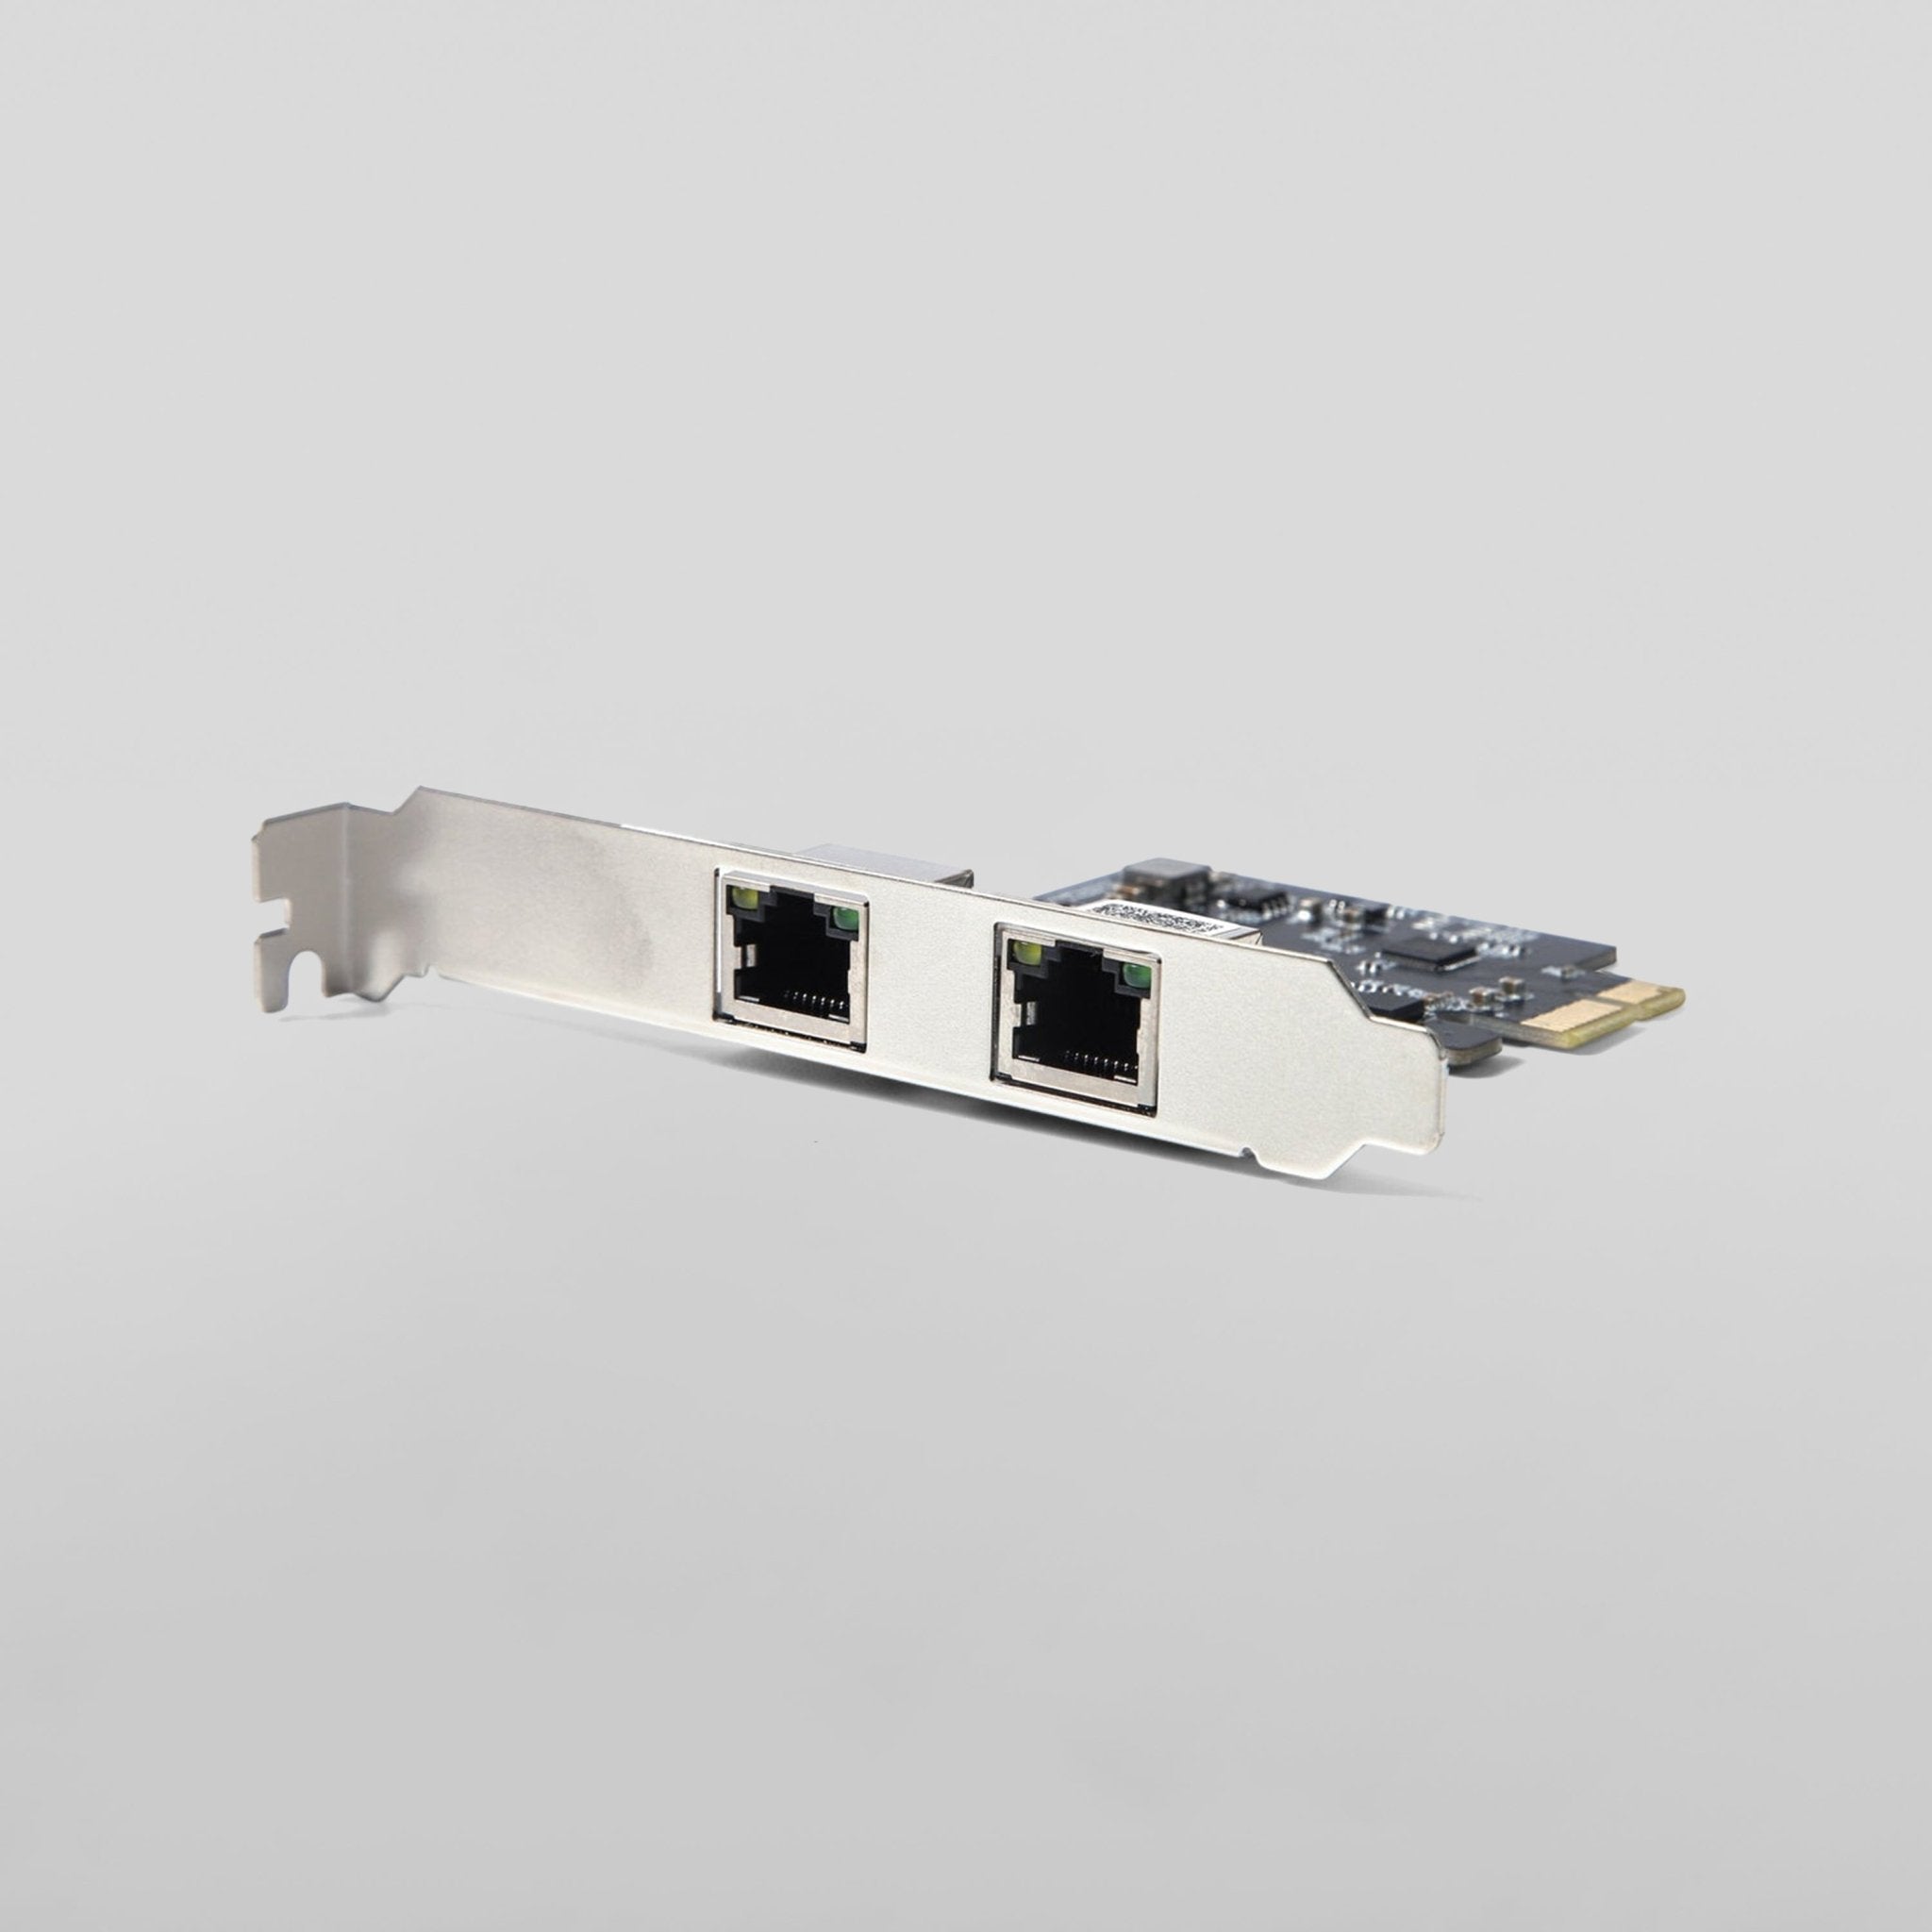 PCIe to Dual Port 2.5G Ethernet Adapter Realtek RTL8125B Chipset - Zima Store Online